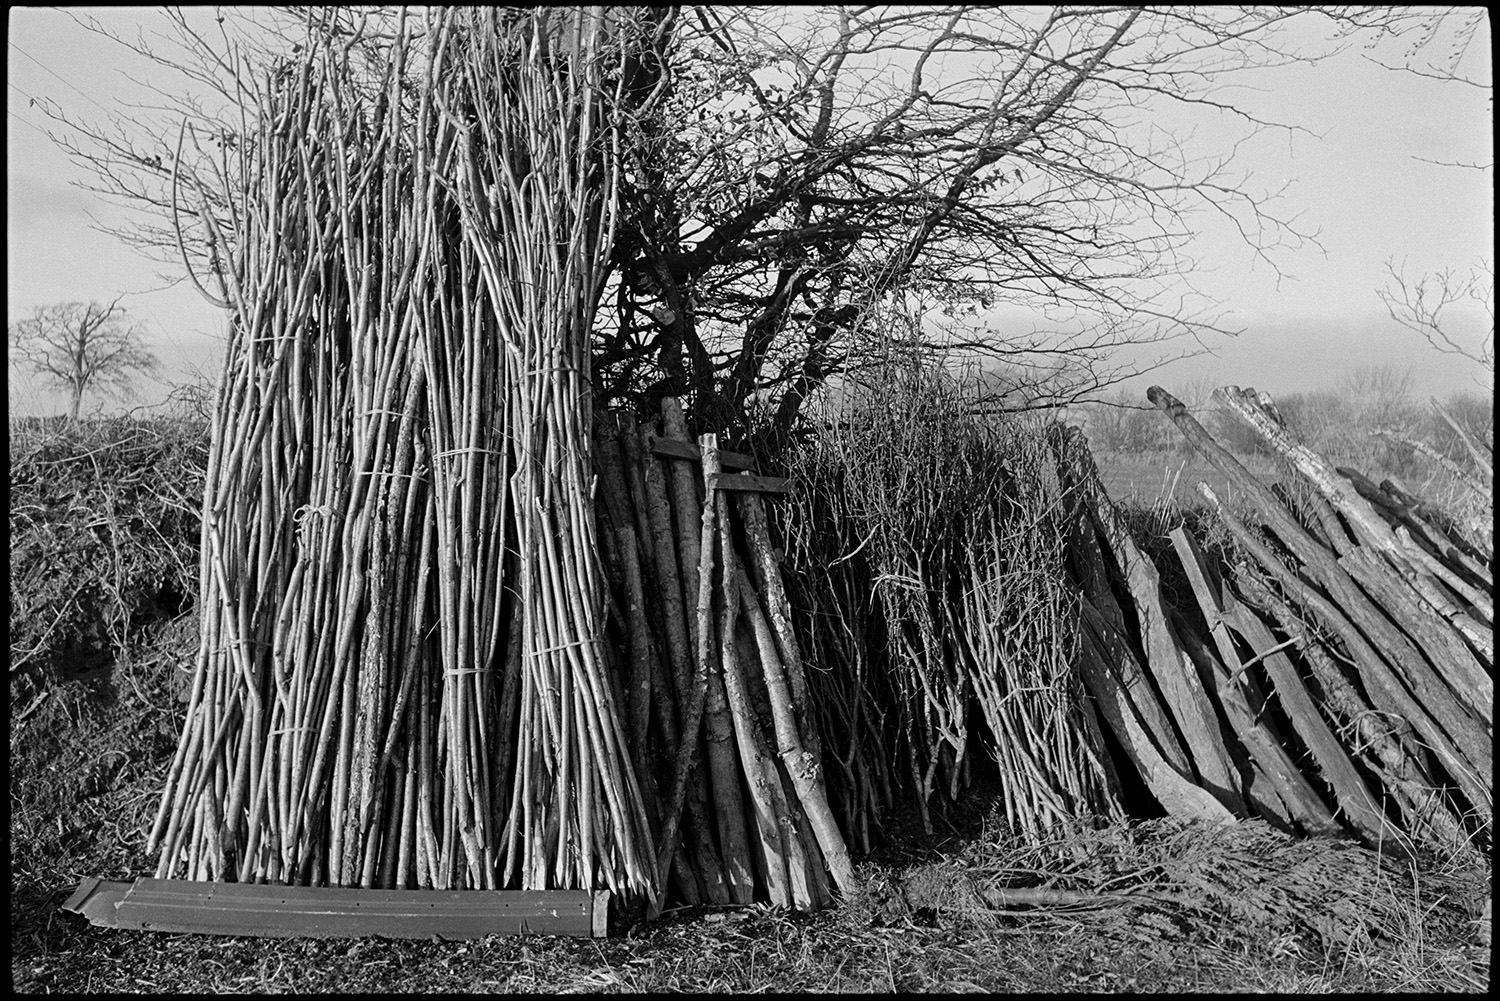 Bean sticks and pea sticks stacked.
[Bean sticks, and pea sticks, made by Gordon Sanders, stacked with wooden poles against a hedge at Reynards Park, Ashreigney.]